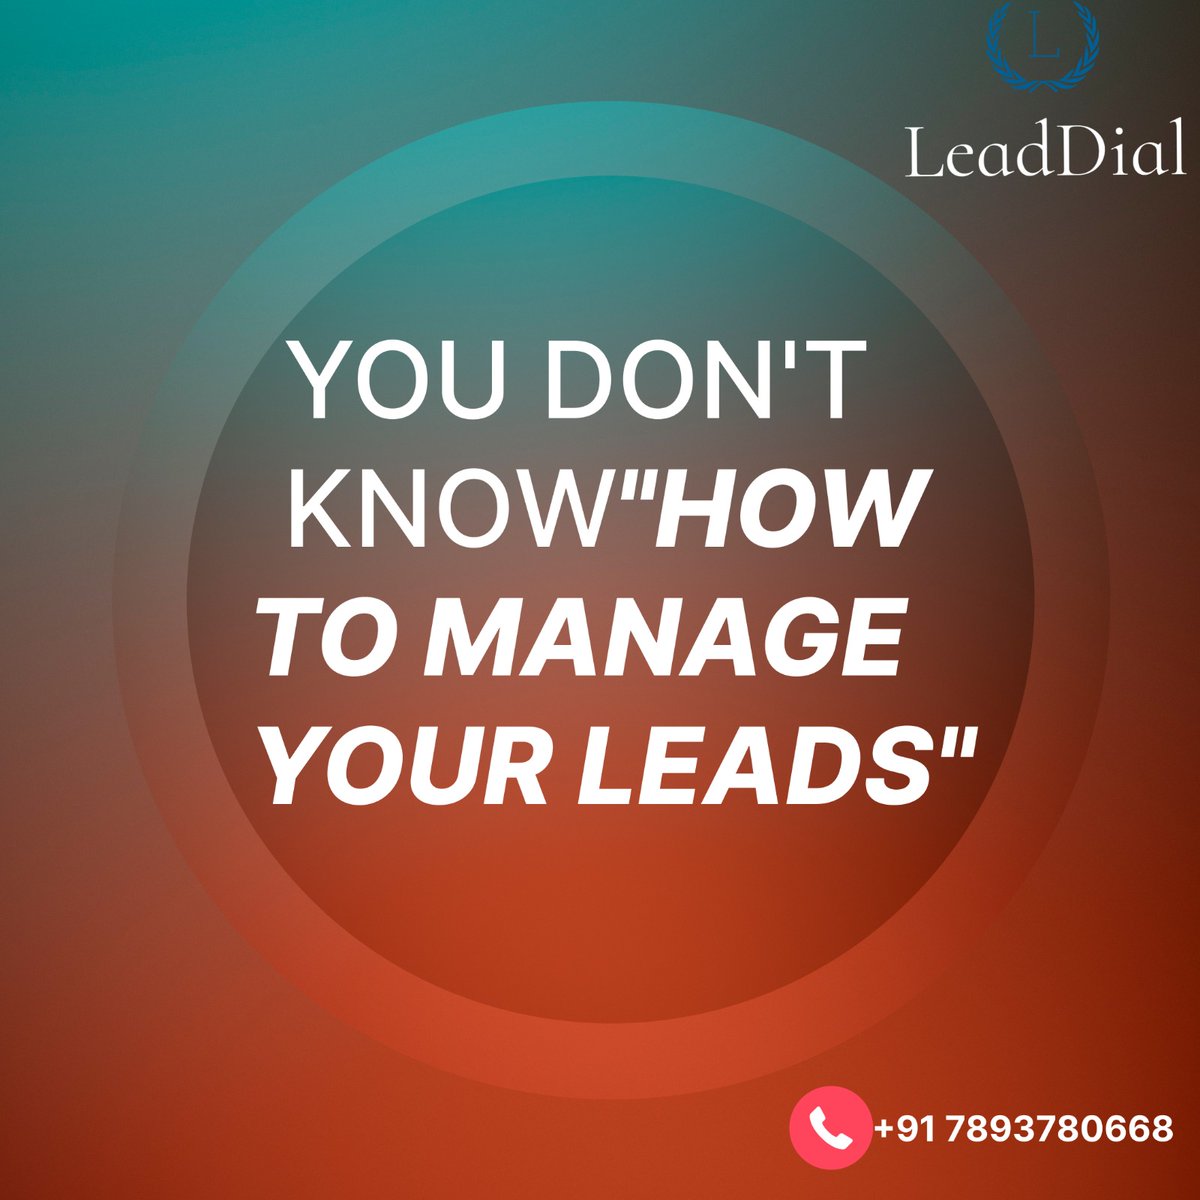 #LeadDial #CRMTools #LeadManagement
#SalesTech #CustomerEngagement
#SalesCRM #LeadGeneration
#CRMSoftware #SalesAutomation
#LeadConversion #SalesPipeline
#CRMSystem #LeadFollowUp
#SalesProductivity #CRMStrategy